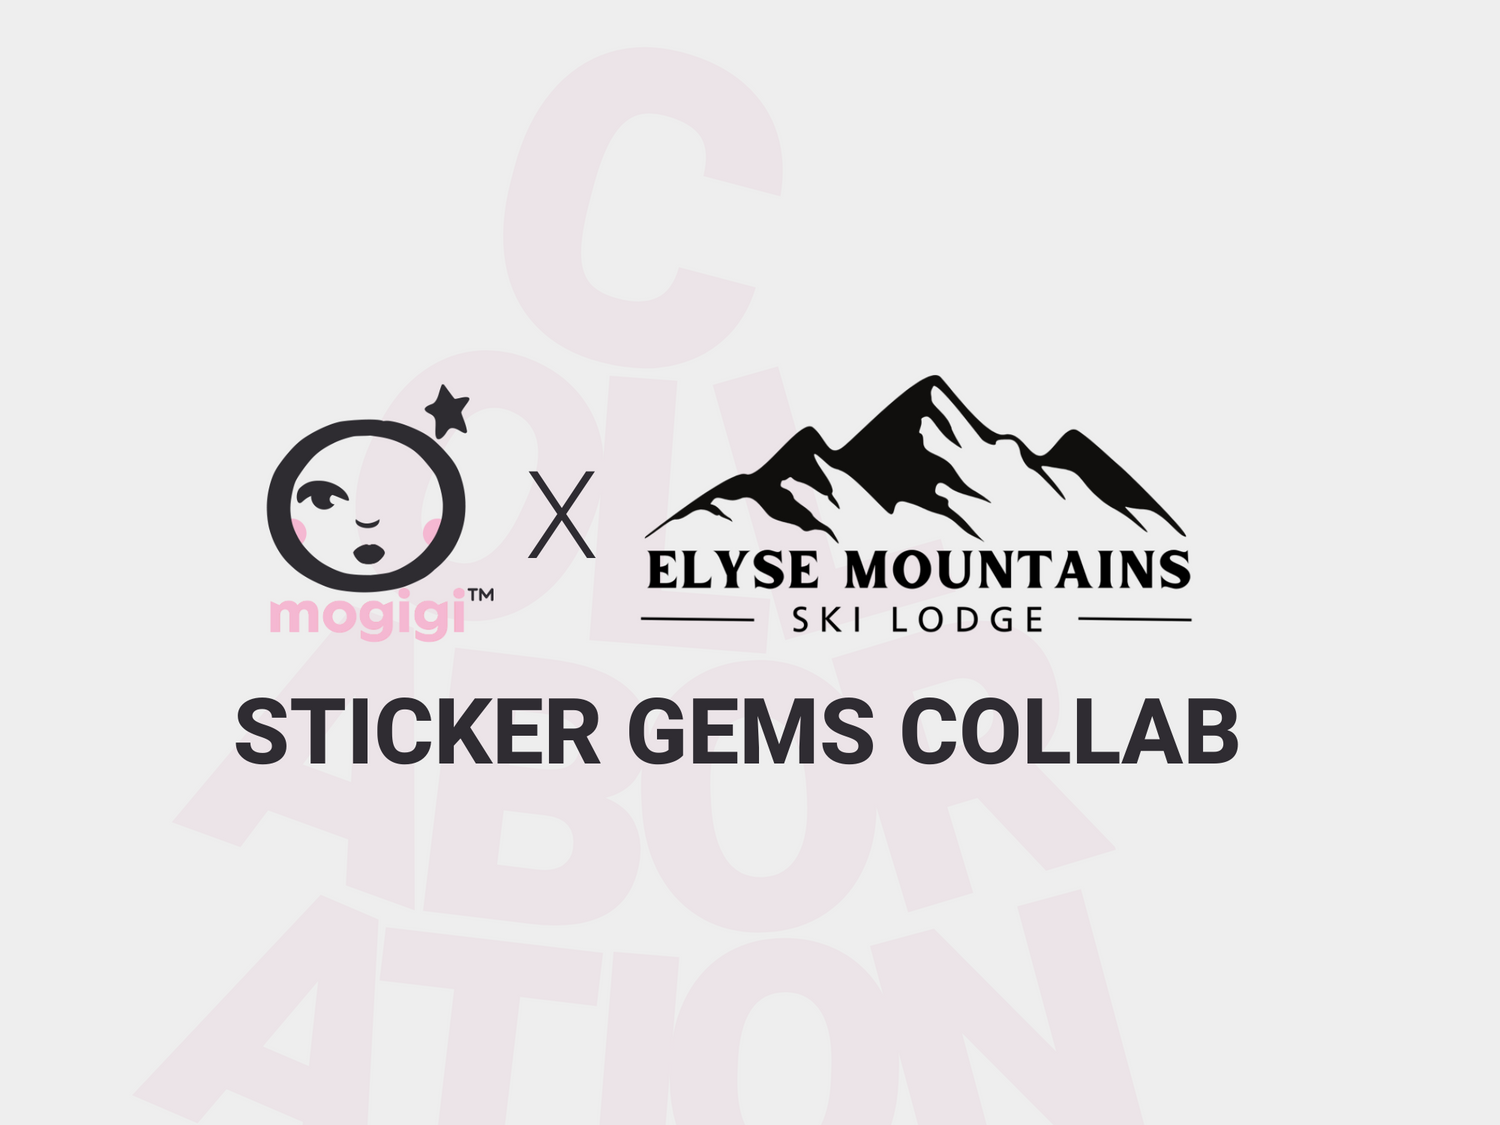 Elyse Mountains & MoGigi Sticker Gems